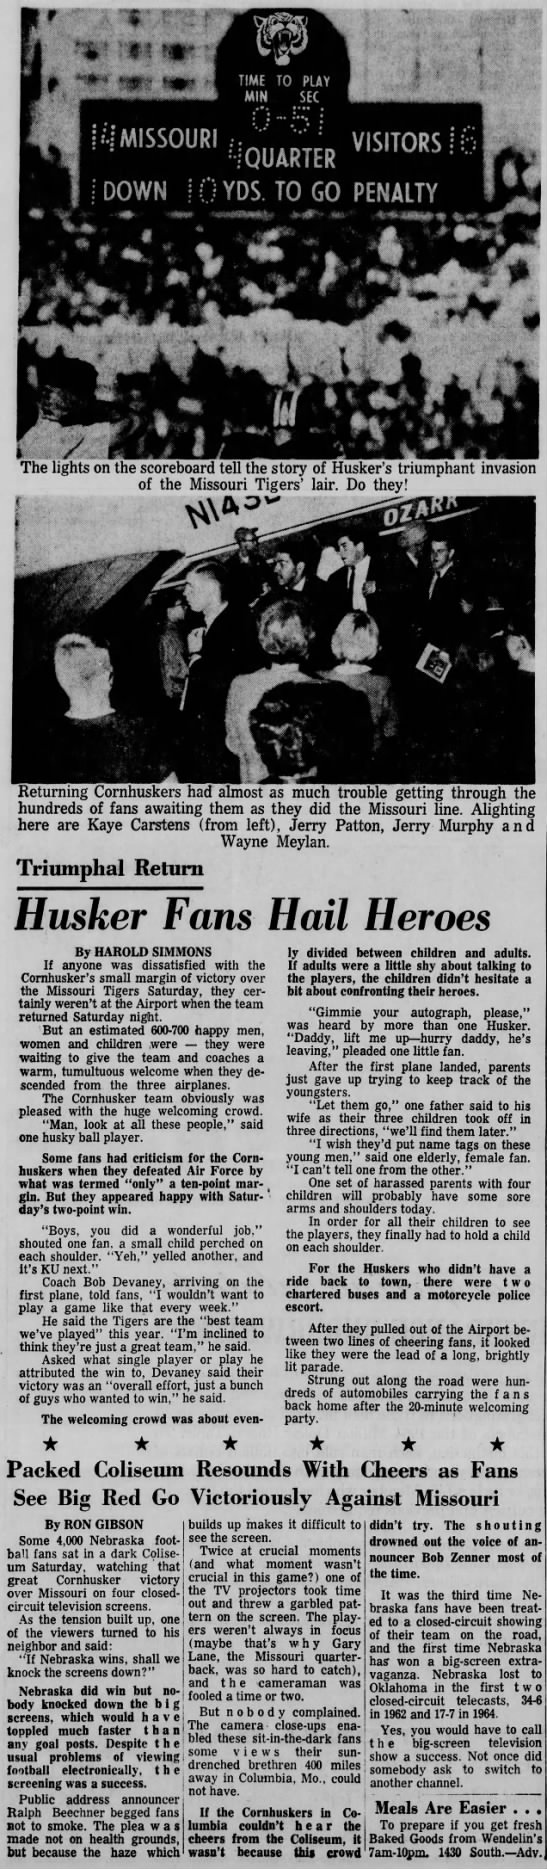 1965 Nebraska-Missouri football, page one coverage - 